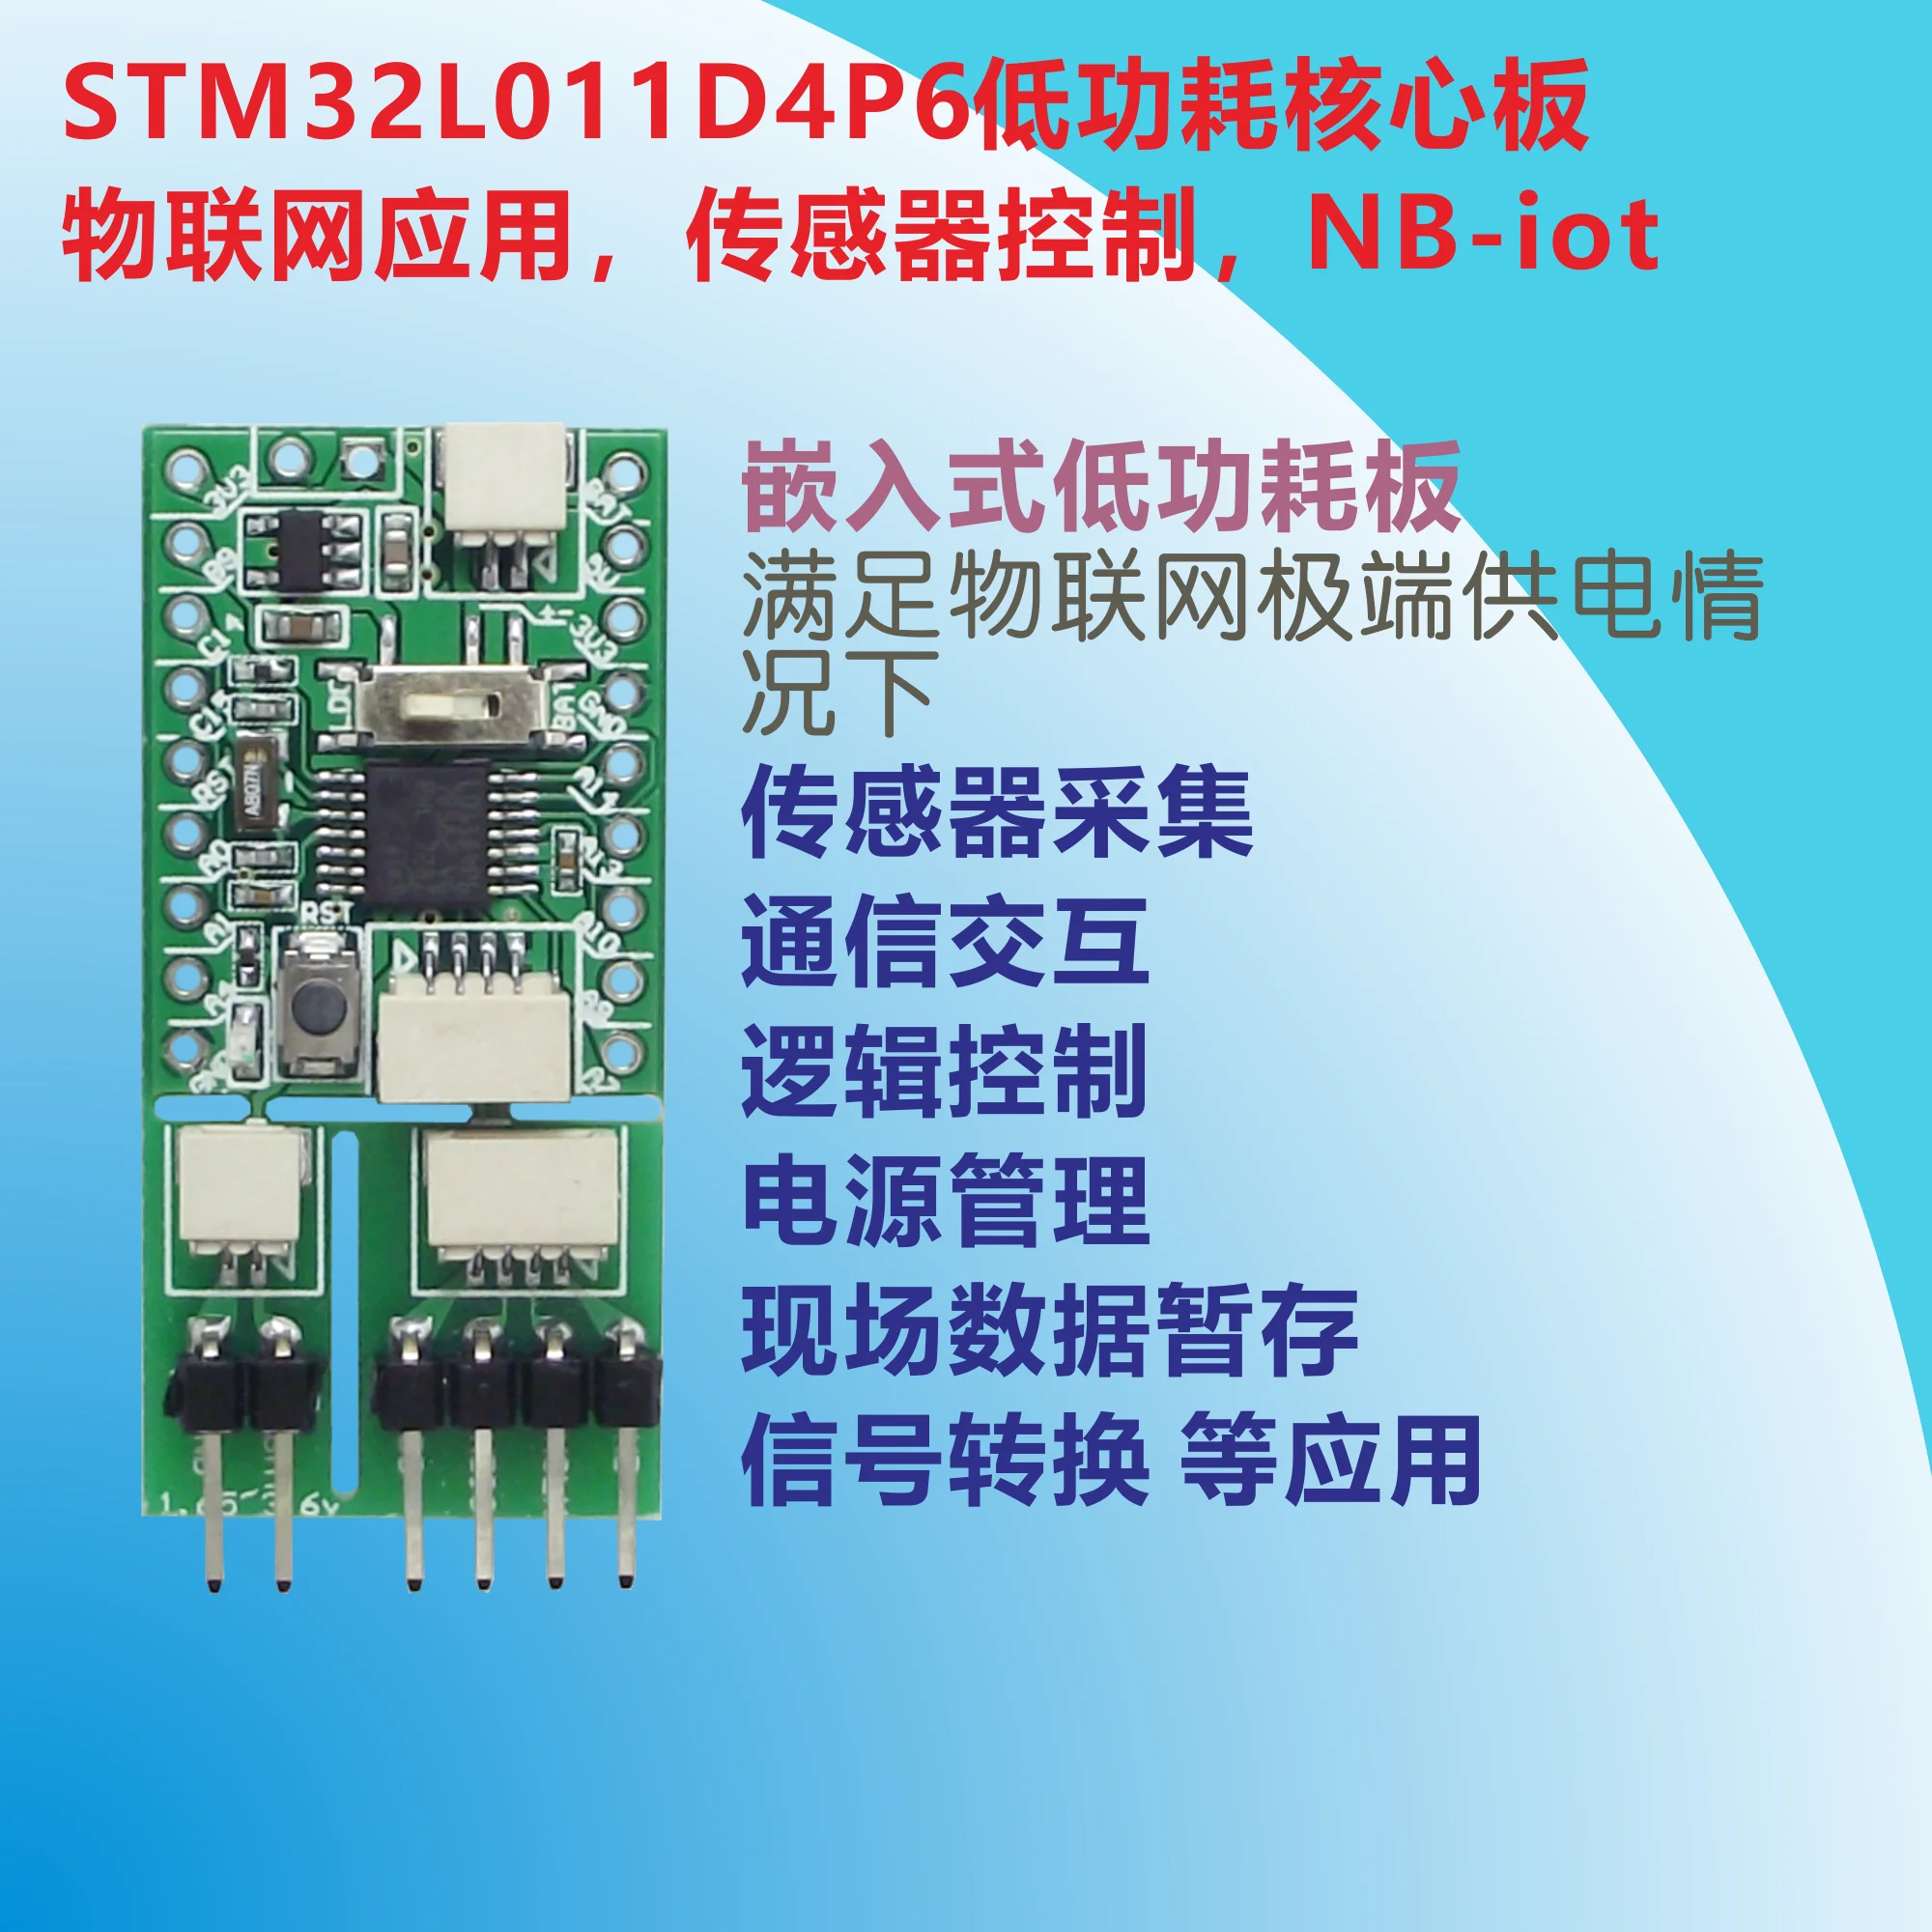 STM32L011D4P6 Low Power Core Board NB-Iot Application Control Board IoT Application